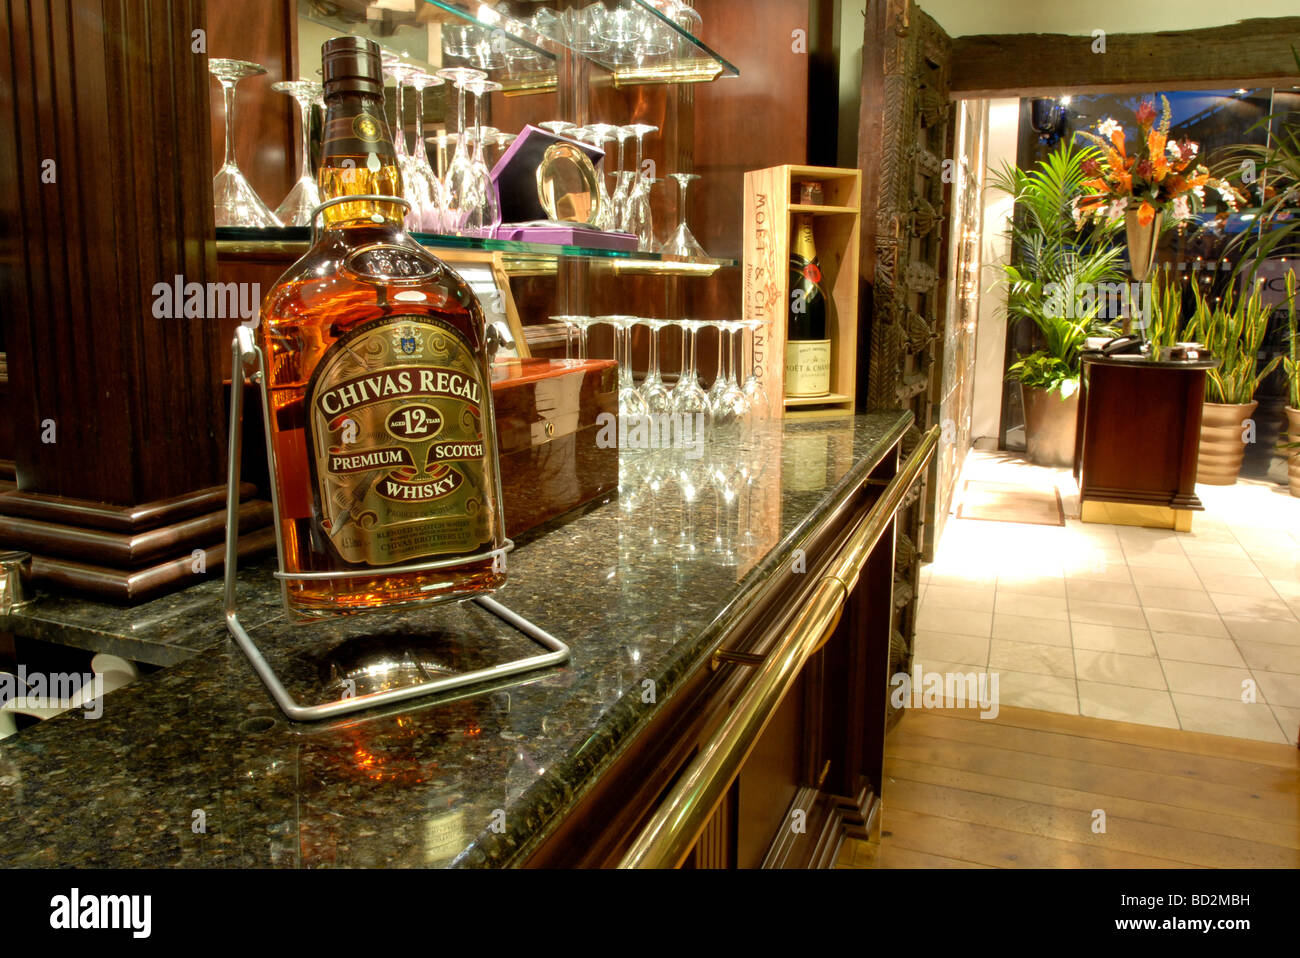 Bottle of Chivas Regal premium Scotch whisky Stock Photo